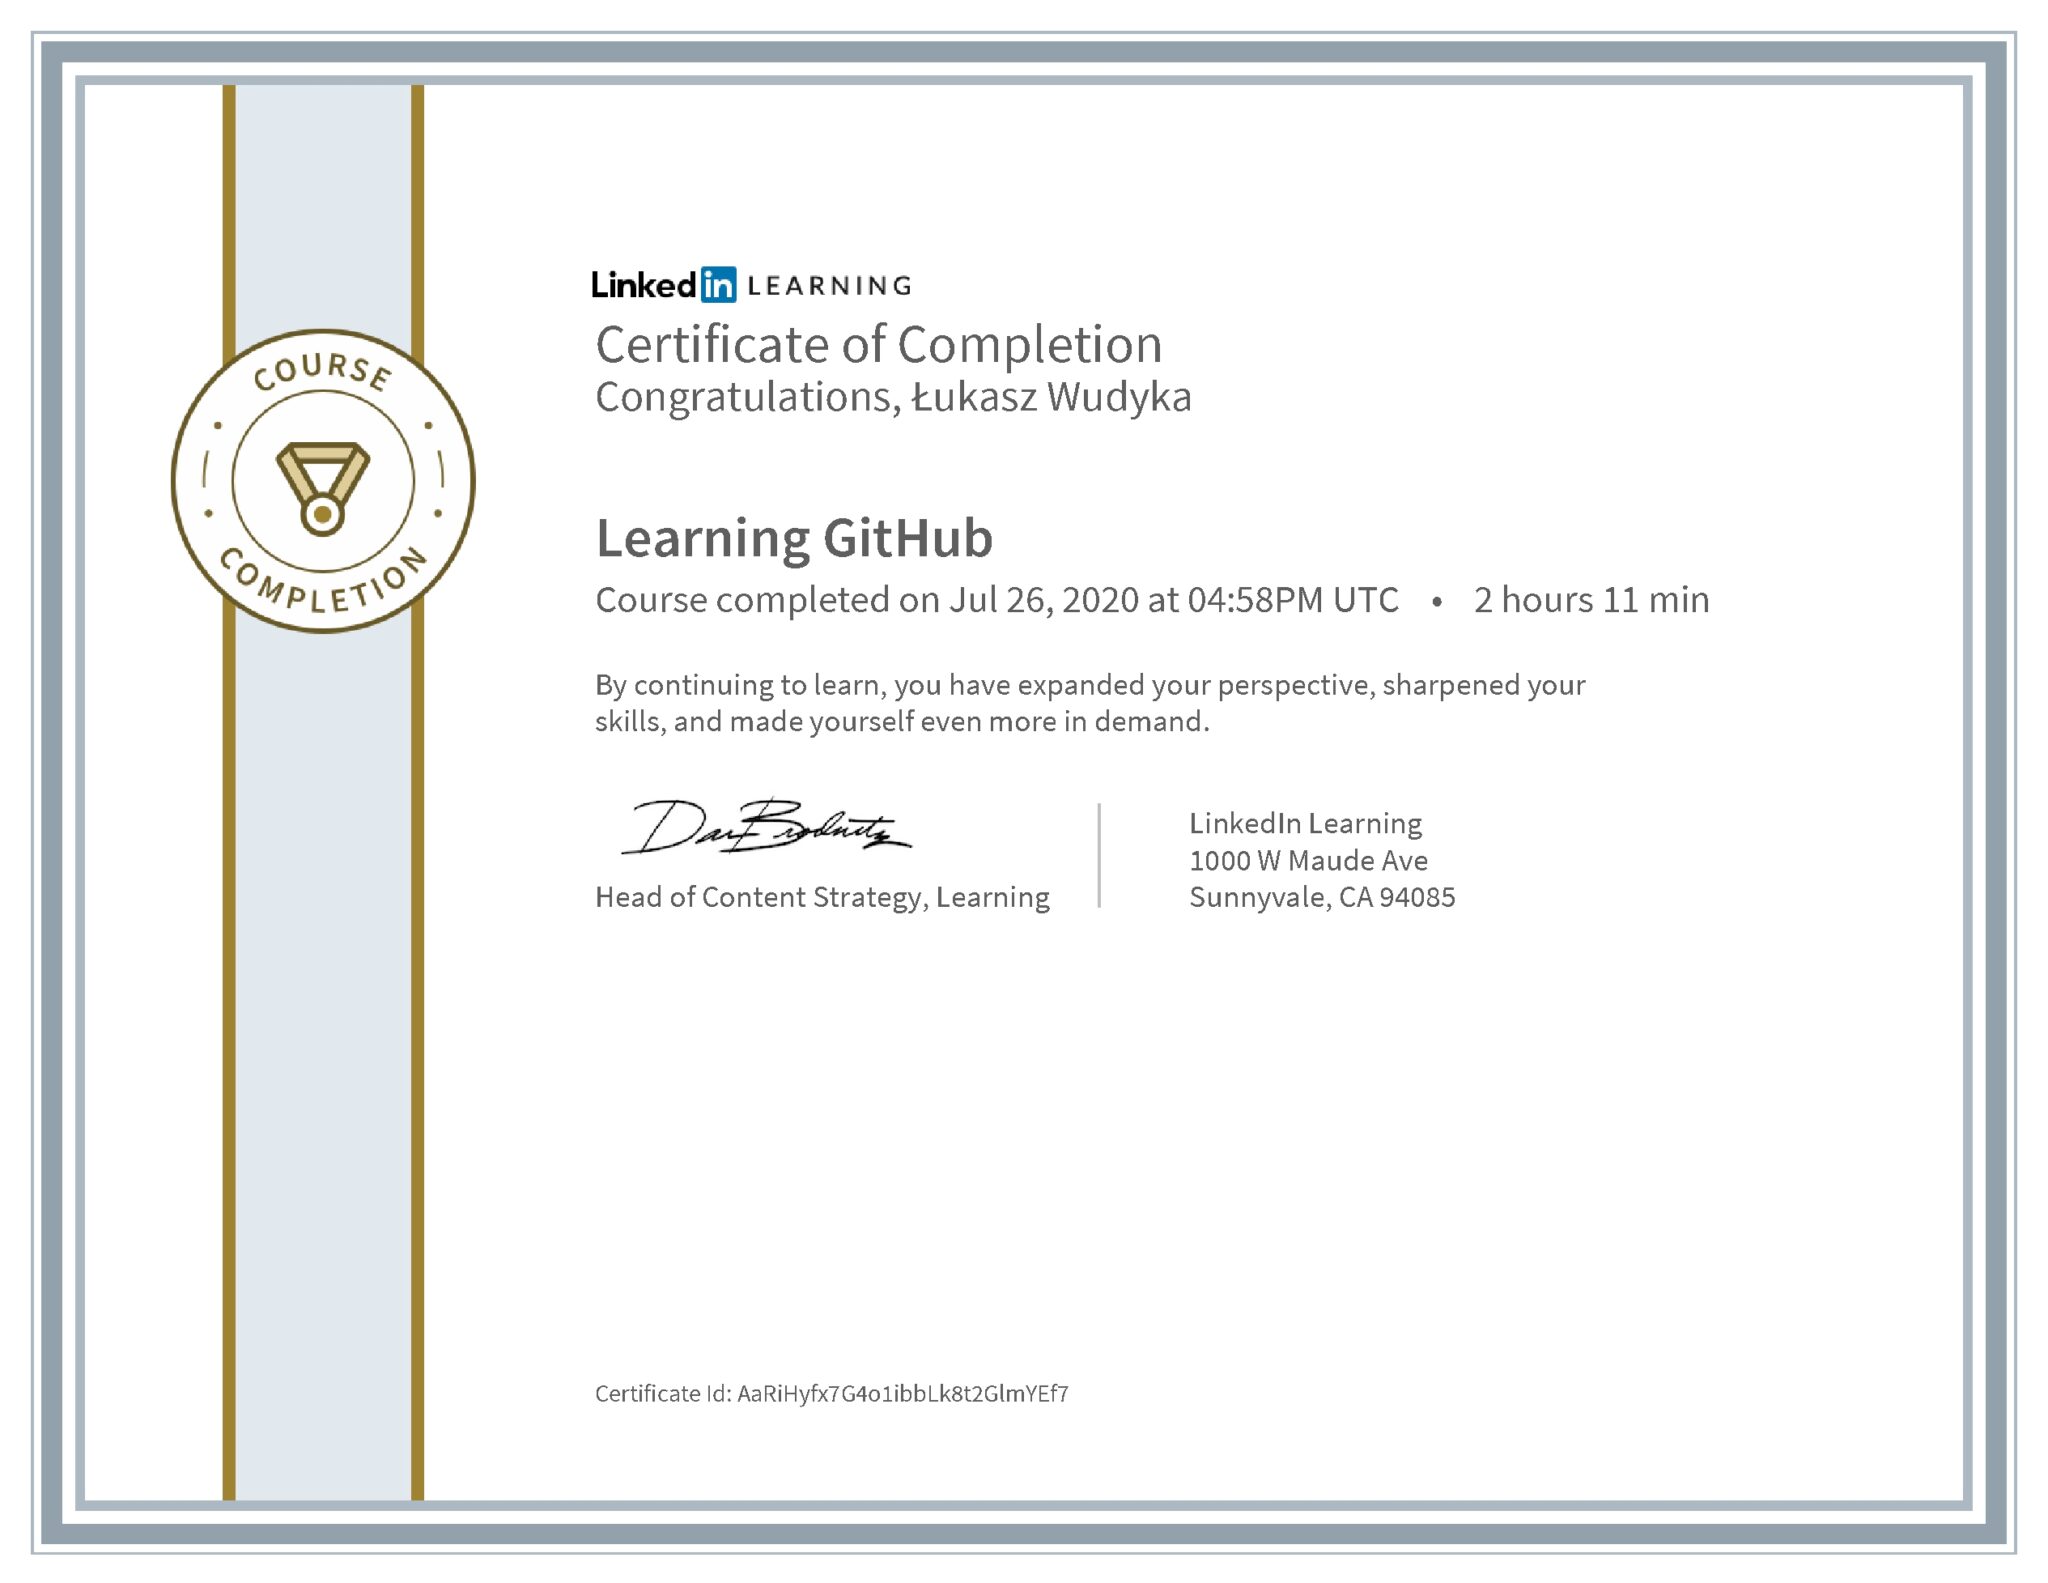 Łukasz Wudyka certyfikat LinkedIn Learning GitHub